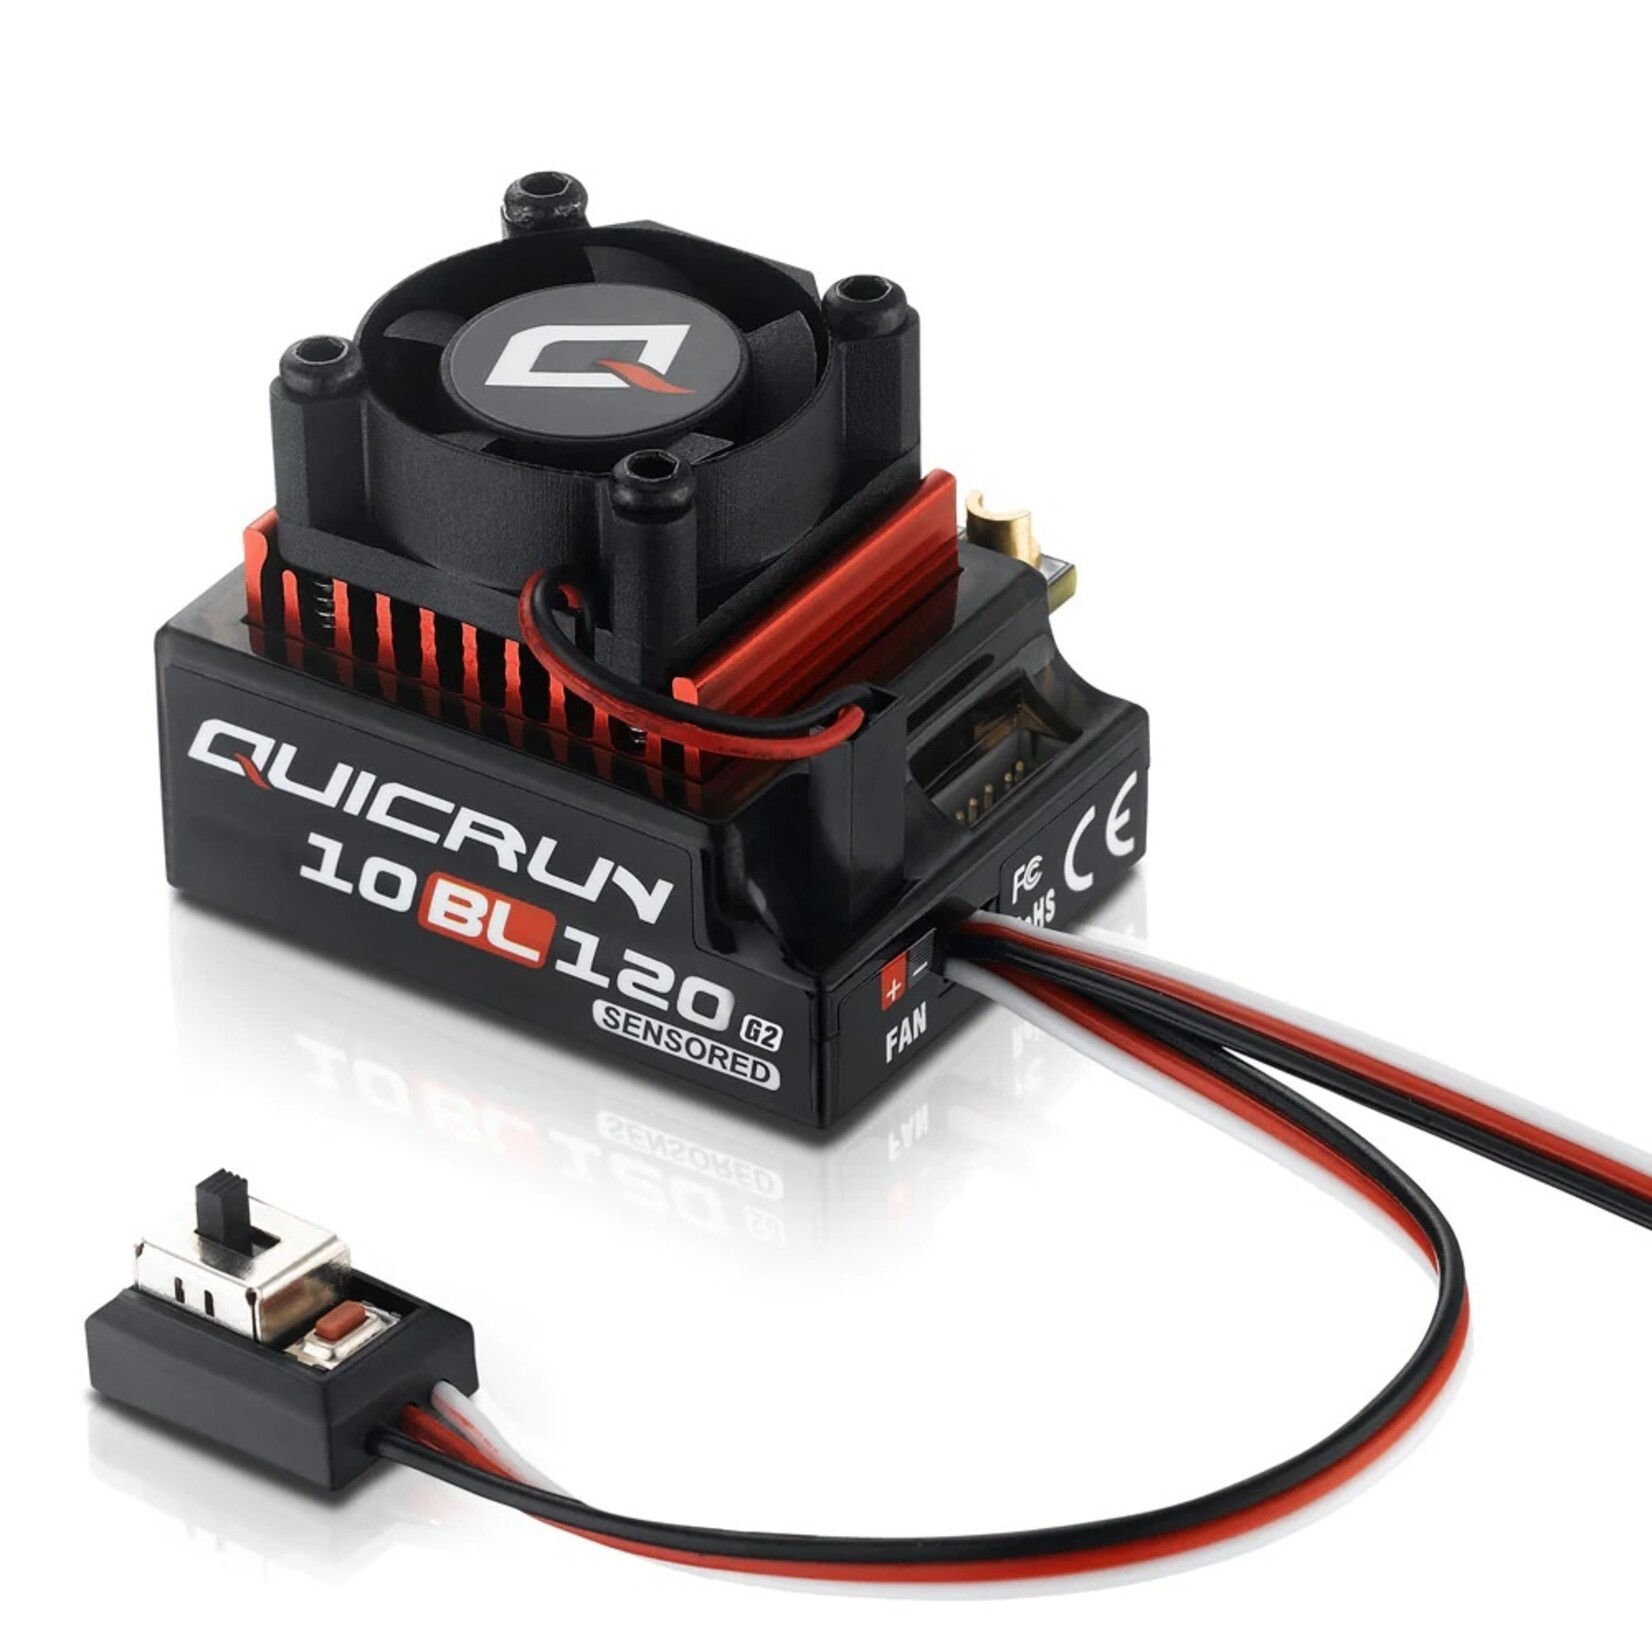 Hobbywing Quicrun 10BL120 Sensored G2 ESC #HWI30125002